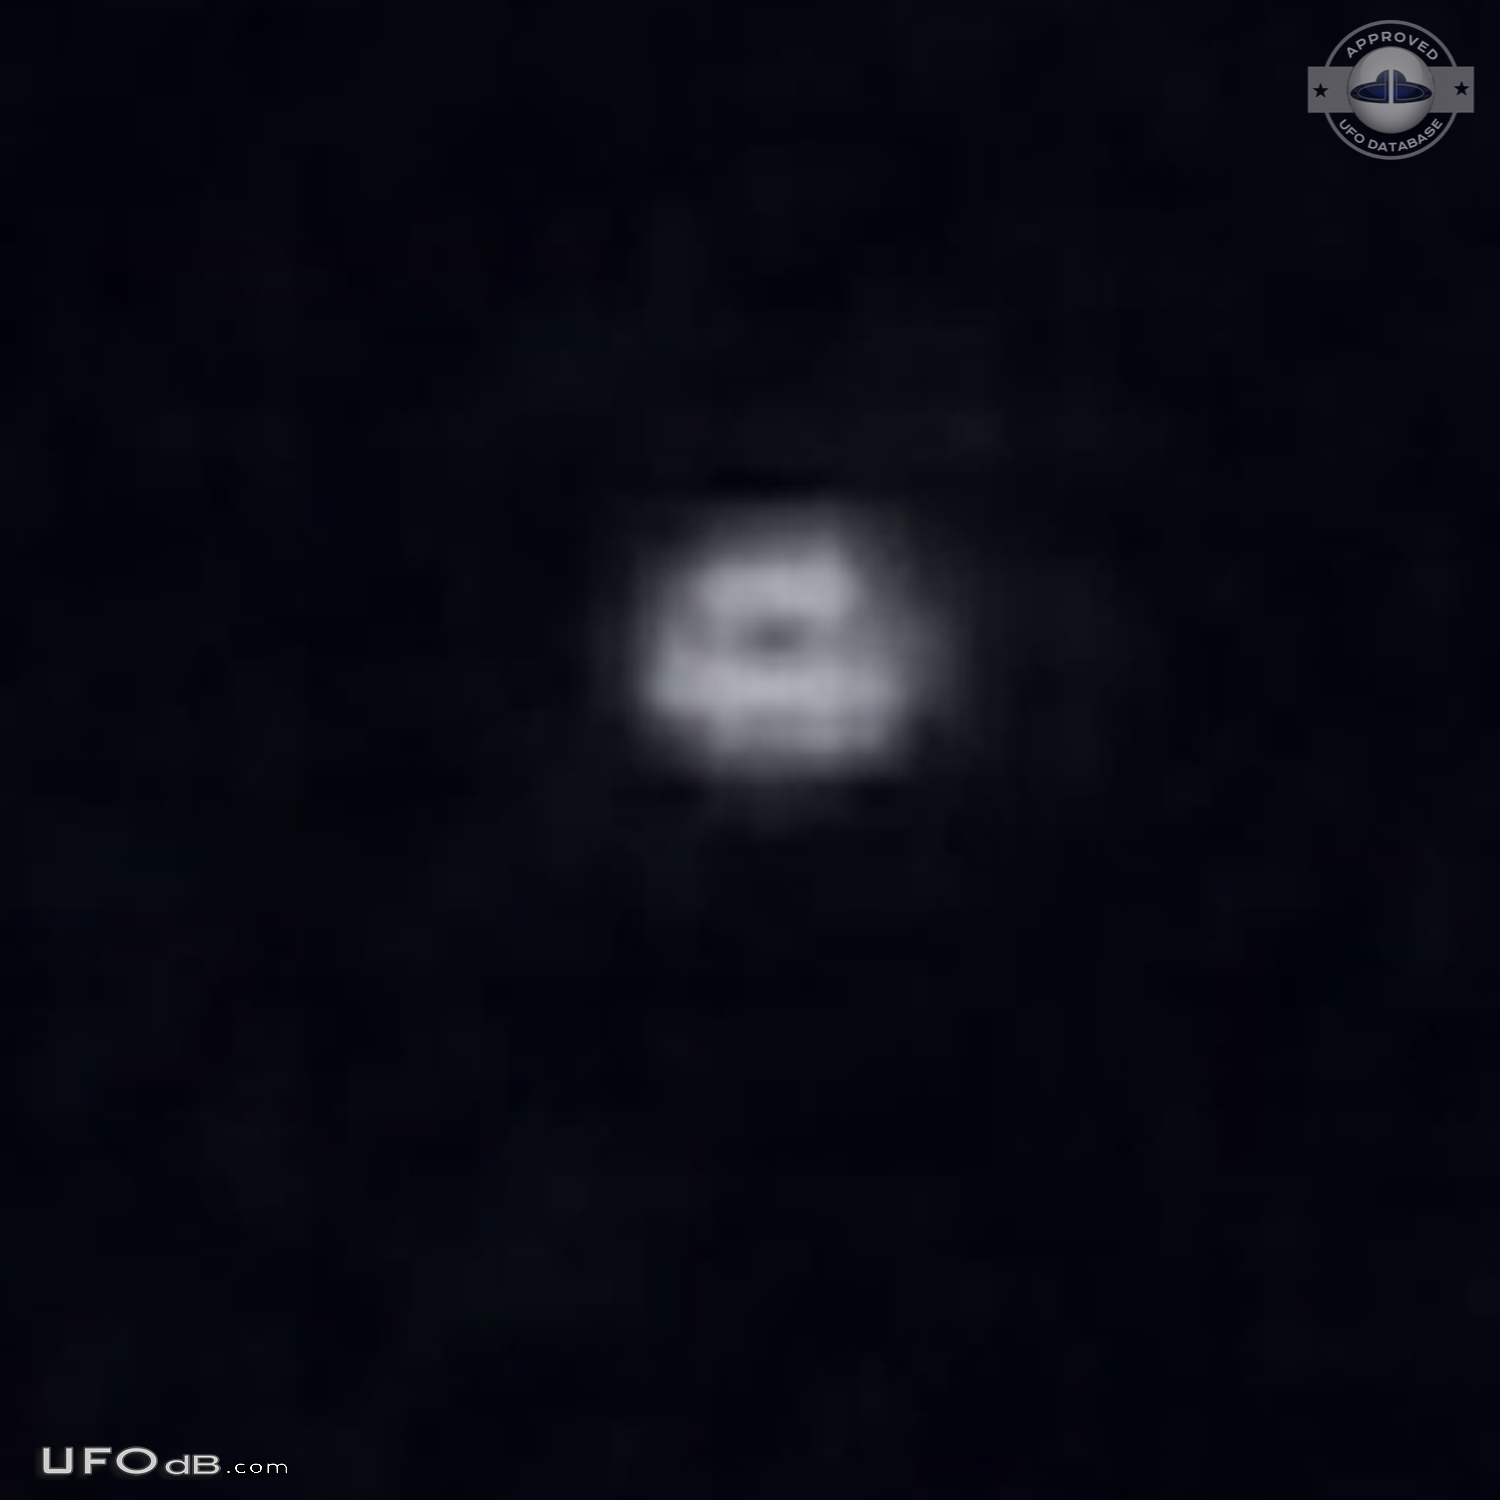 UFO seen every day over Diamond Lake Lodge Oregon USA 2017 UFO Picture #839-4